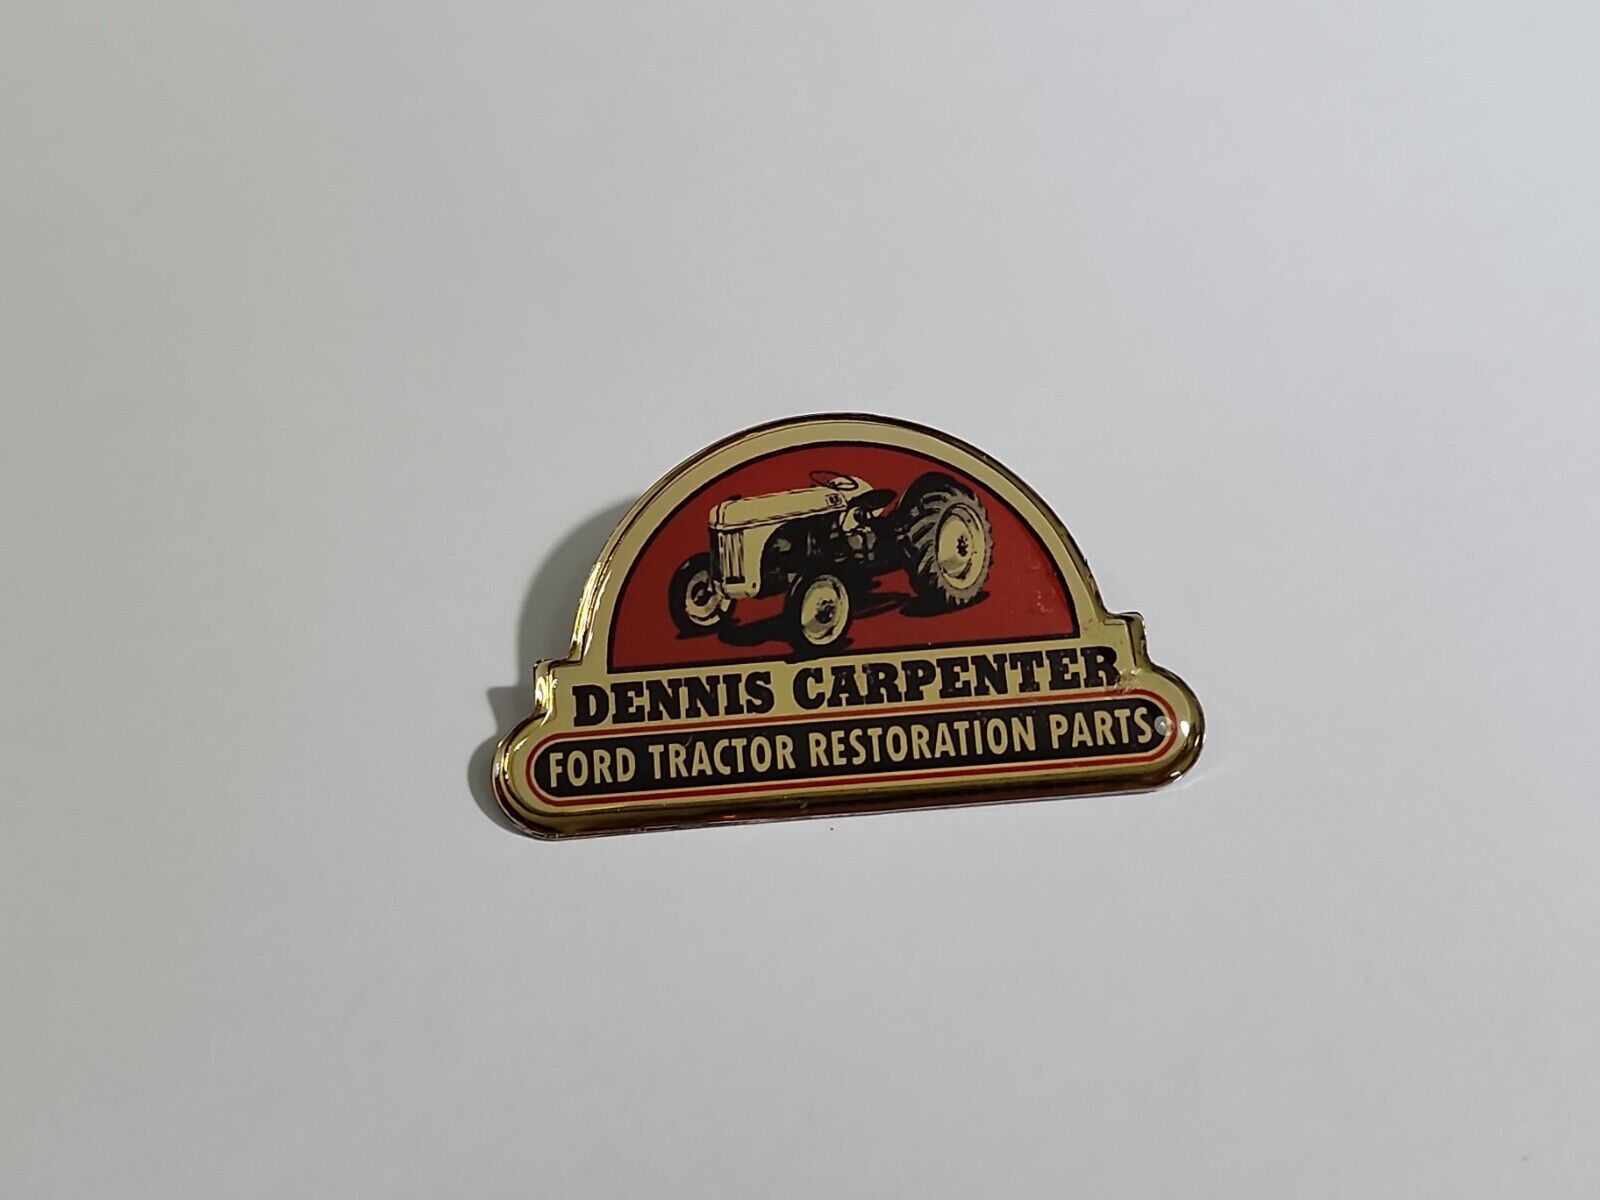 Dennis Carpenter Ford Tractor Restoration Parts Lapel Pin Badge